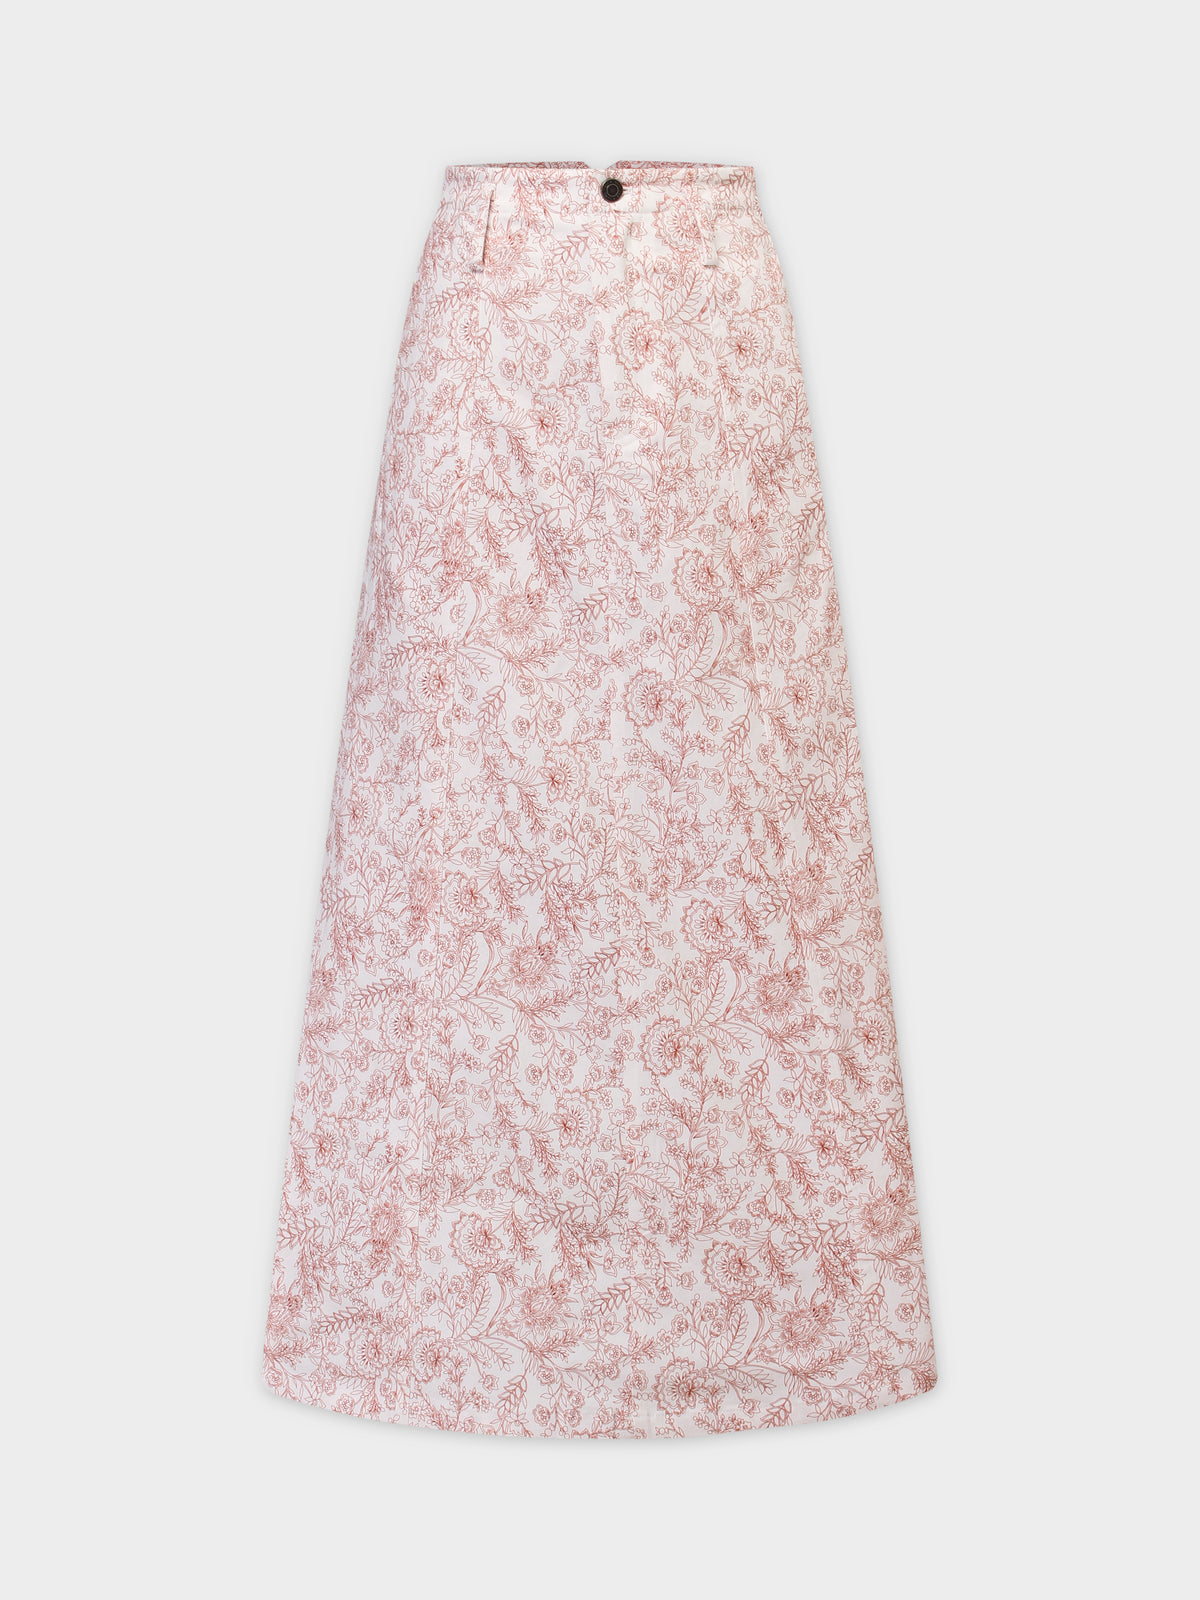 Printed Denim Skirt-Brown Floral